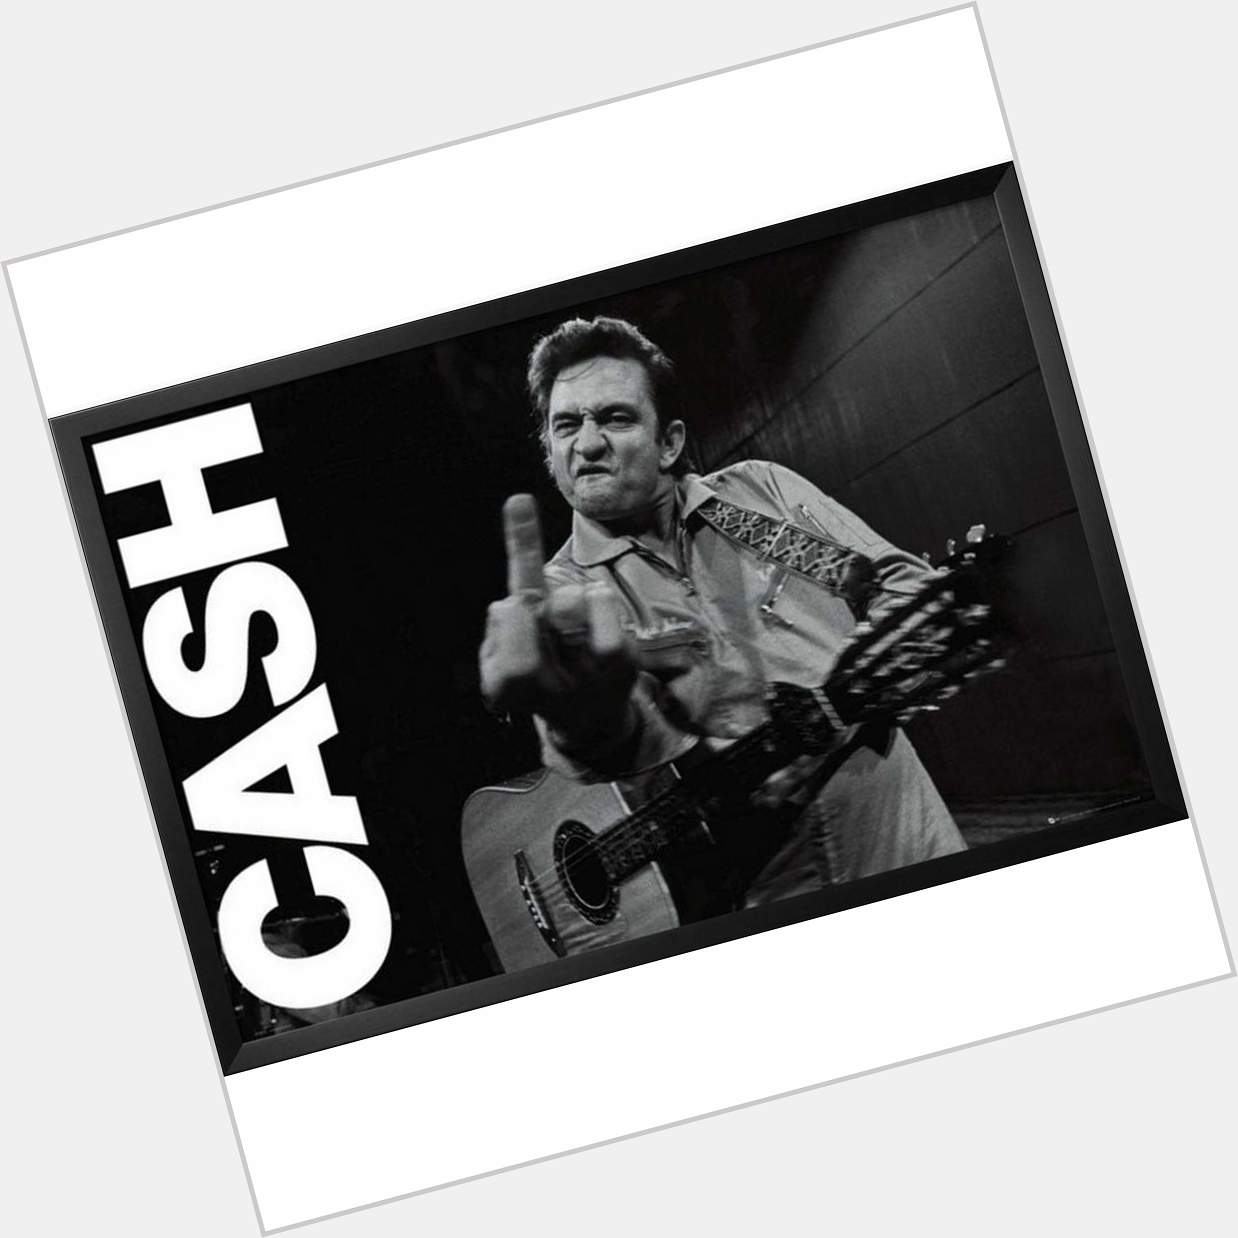 Happy birthday to the man in black, Johnny Cash! 